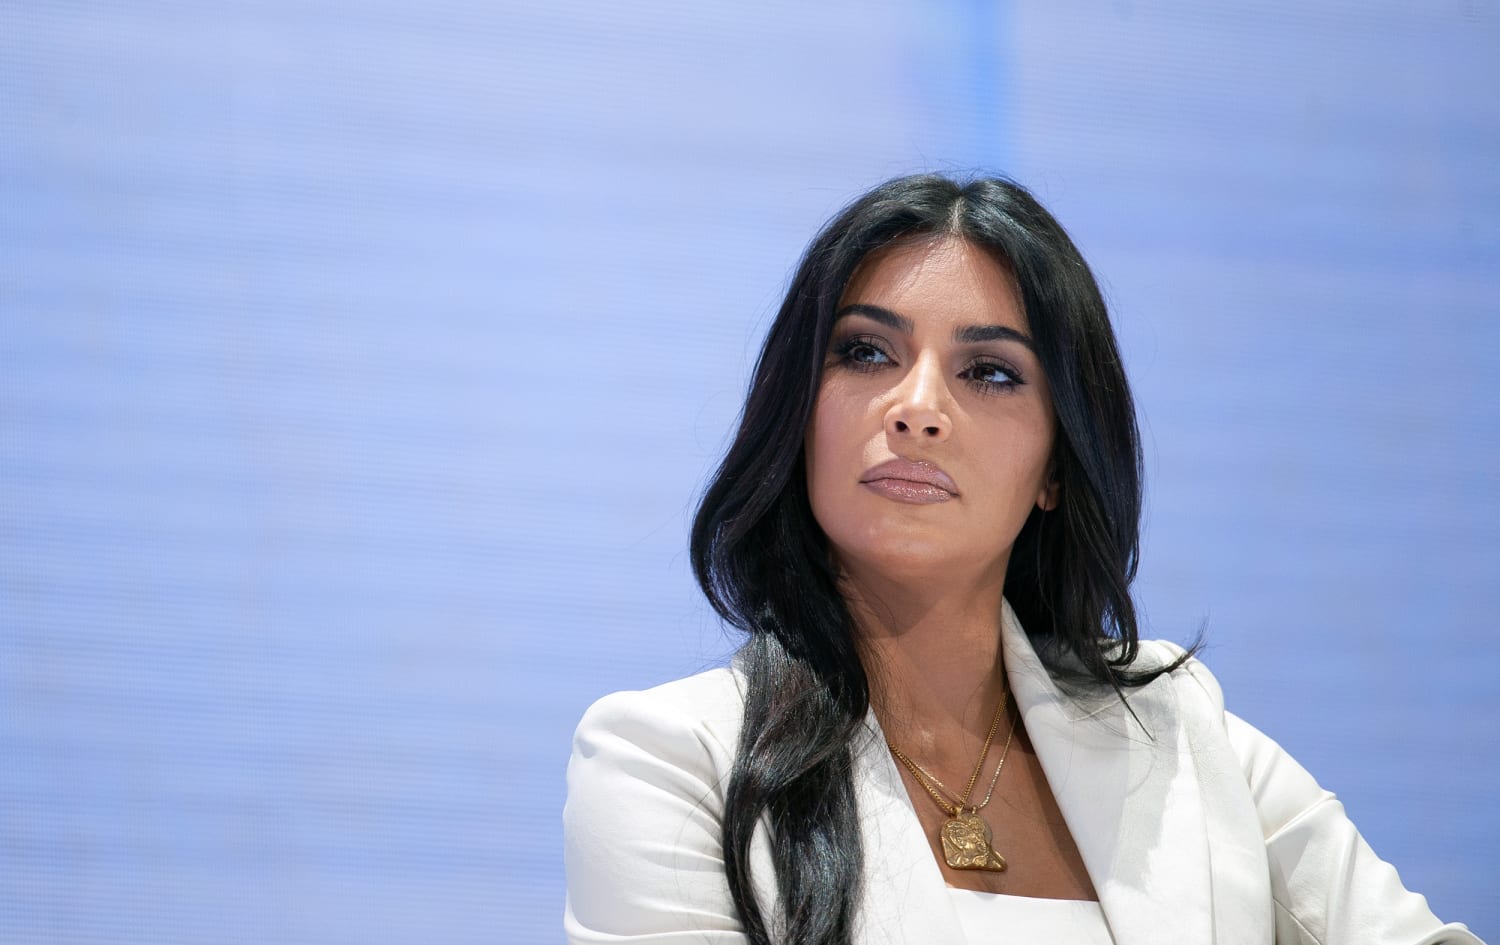 Kim Kardashian joins the billionaire club, according to Forbes